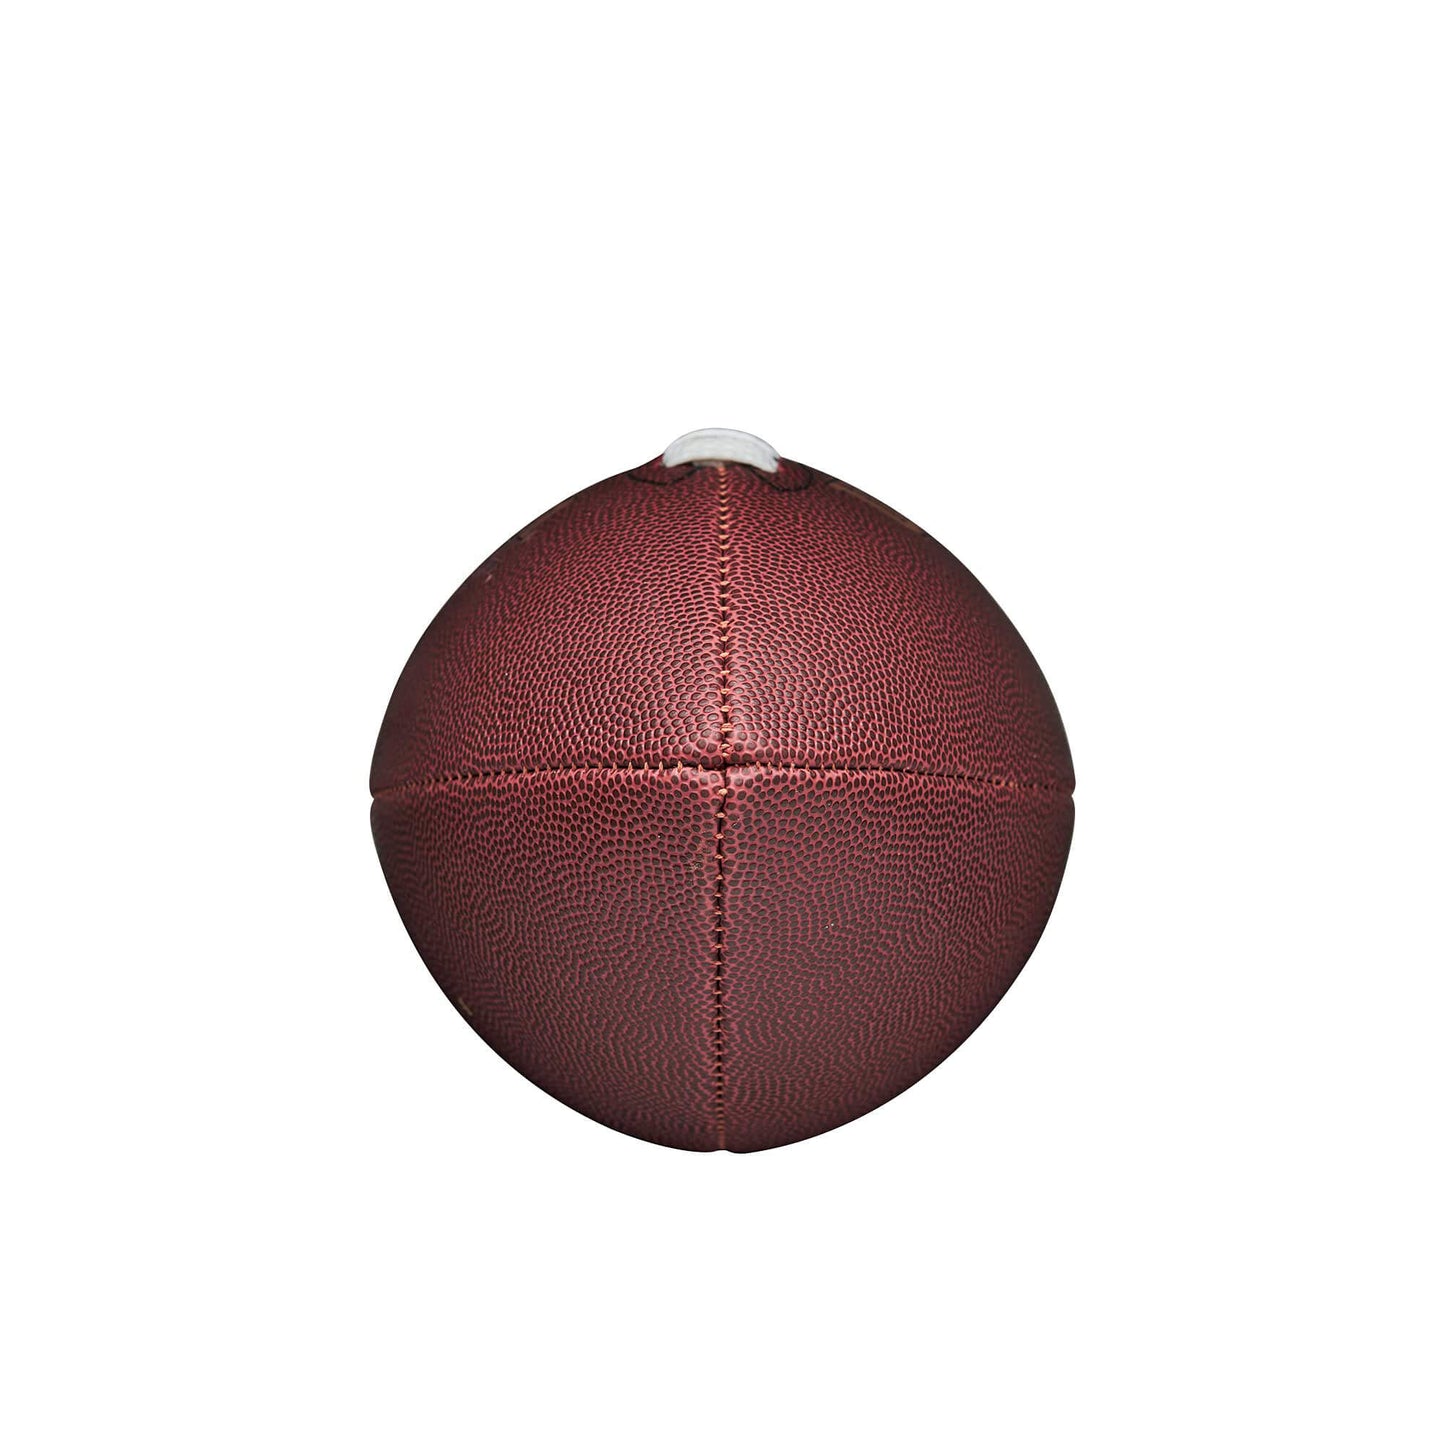 Wilson NFL Ignition Football - Jr. - Brown